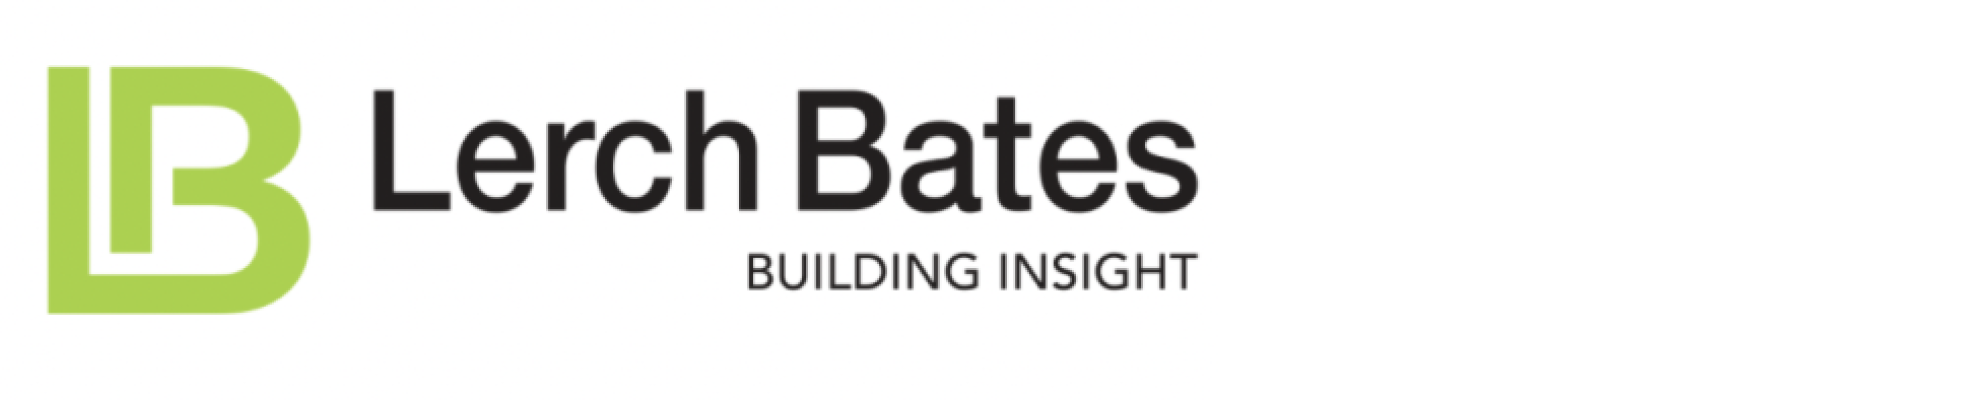 Lerch Bates Logo